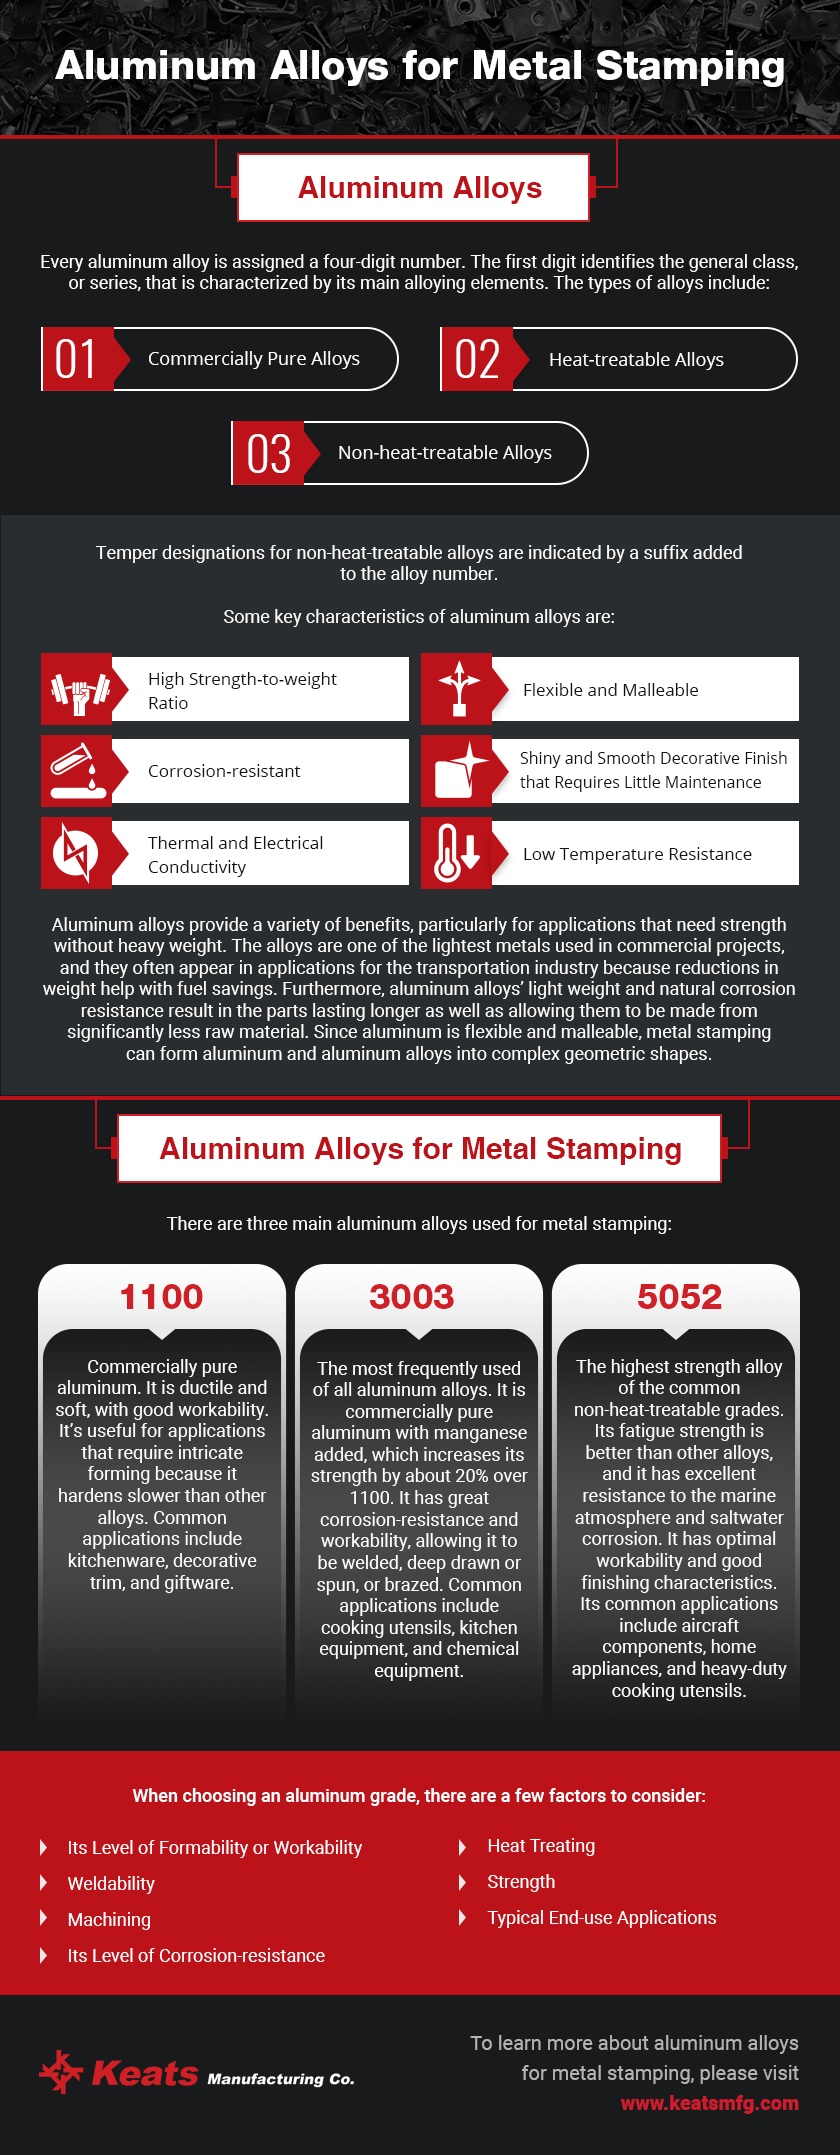 Aluminum Alloys for Metal Stamping